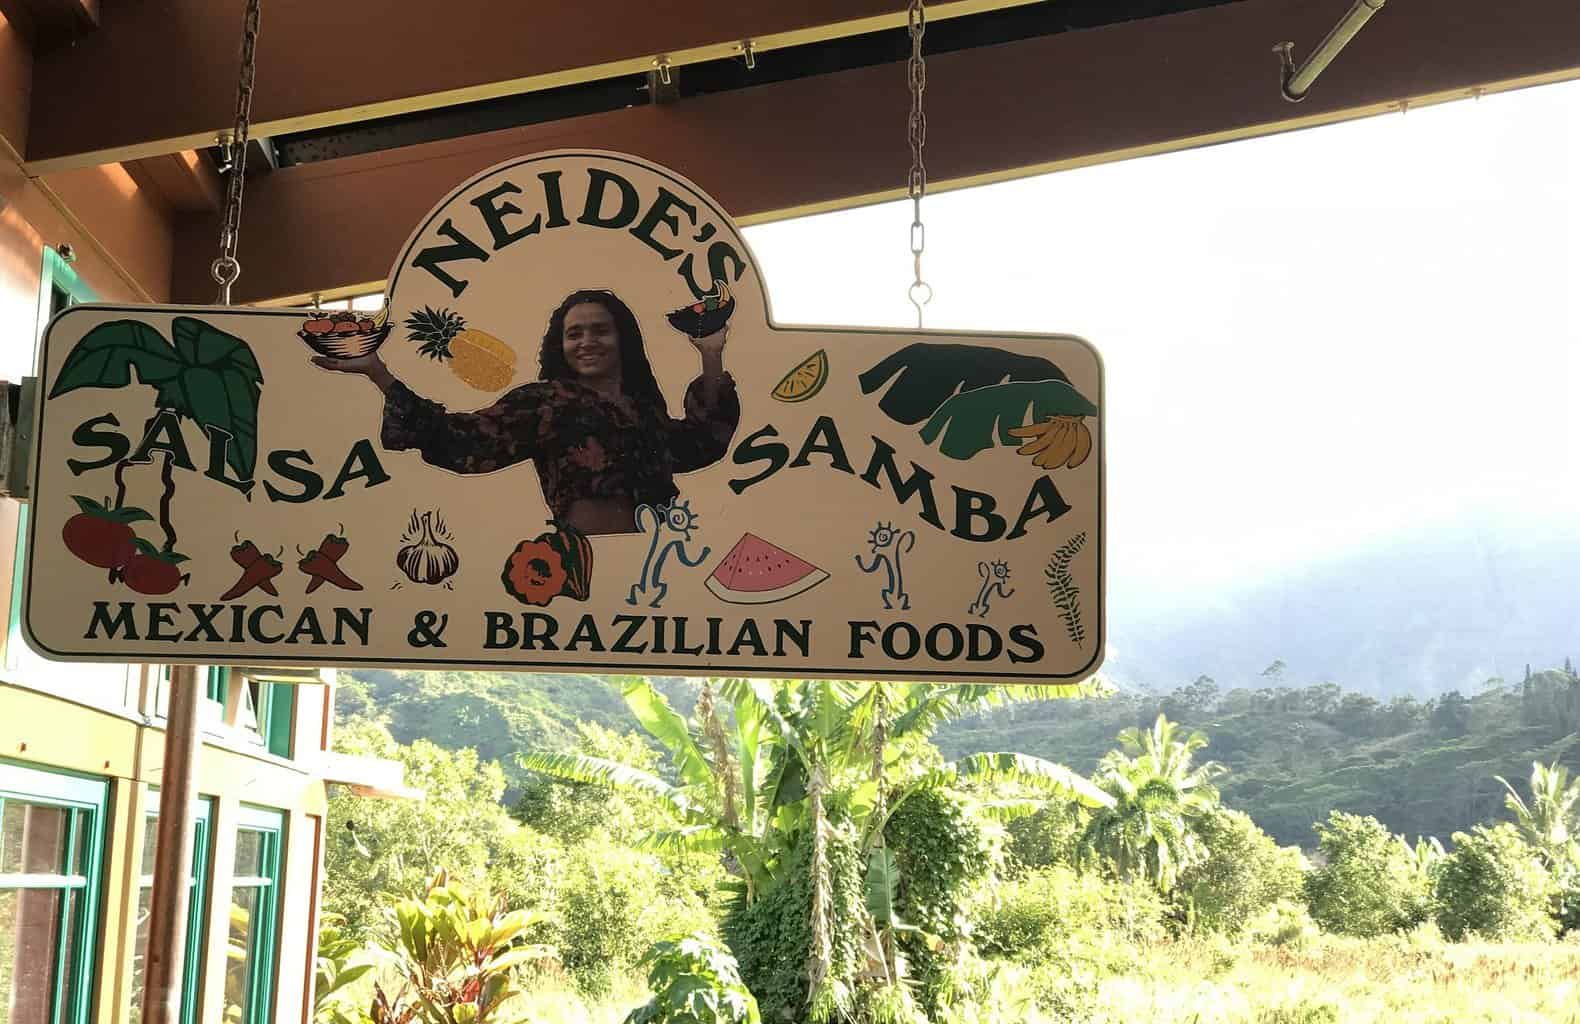 Neide’s Salsa and Samba, Kauai